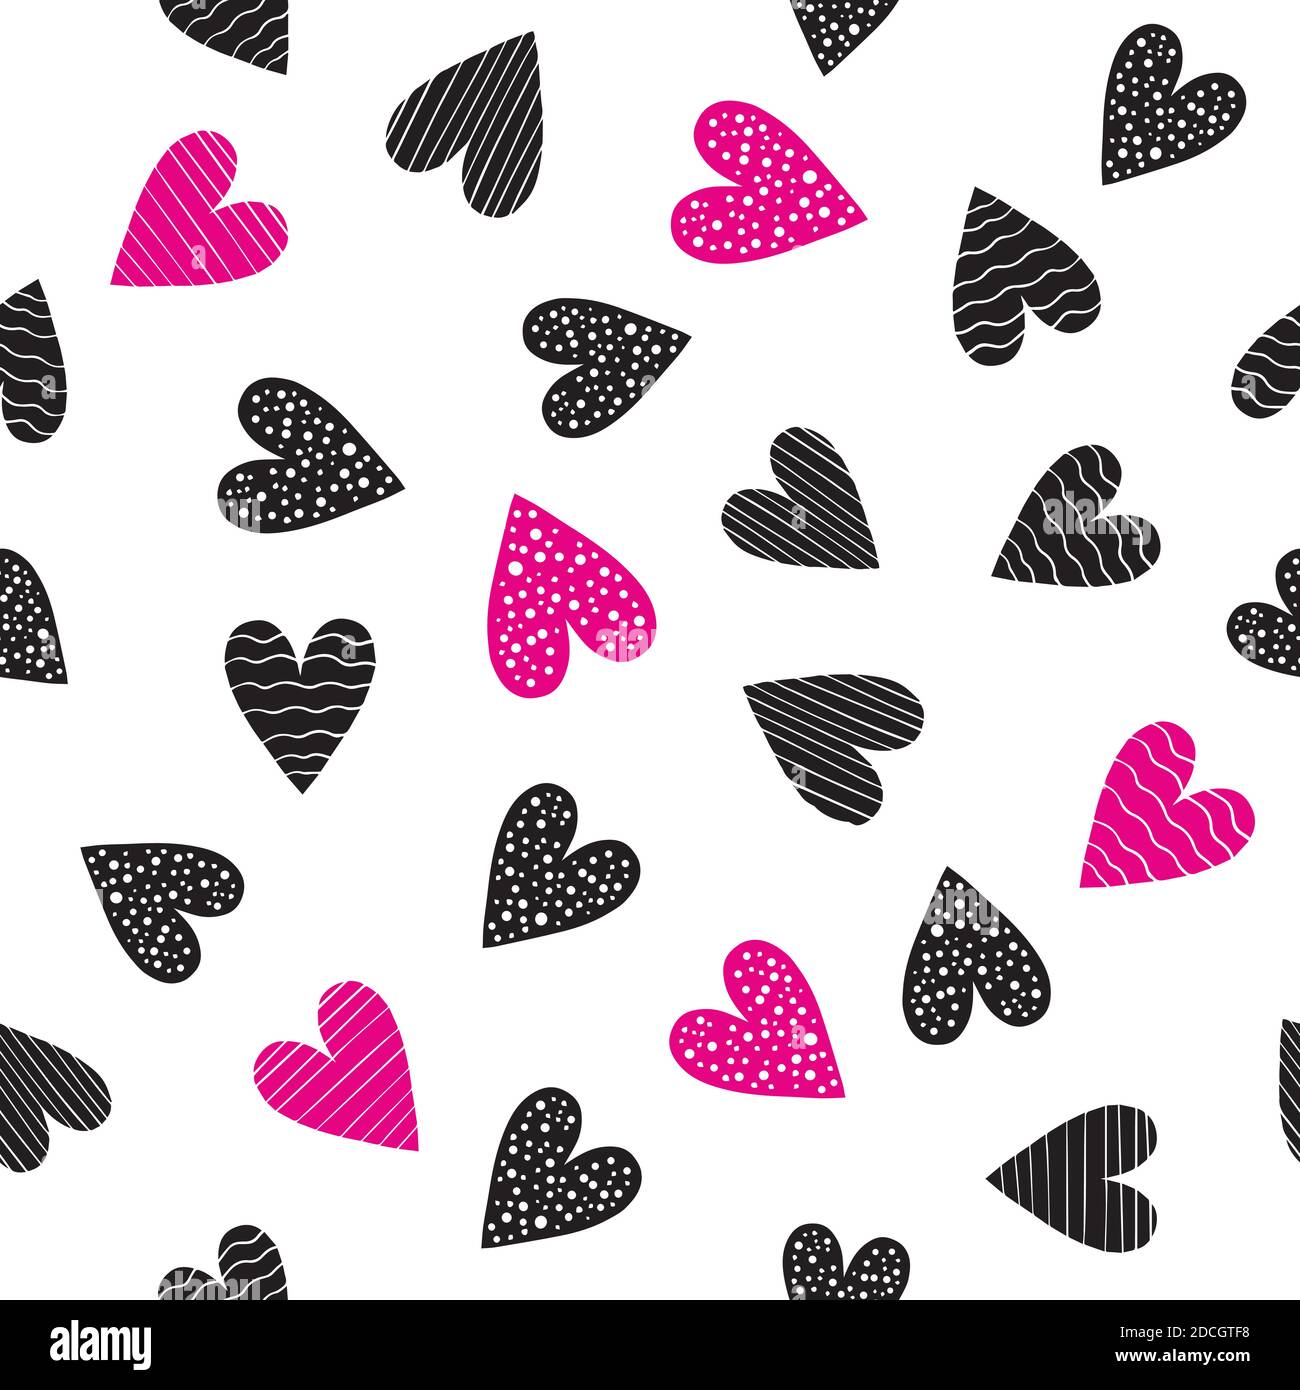 Pink And Black Hearts Wallpaper